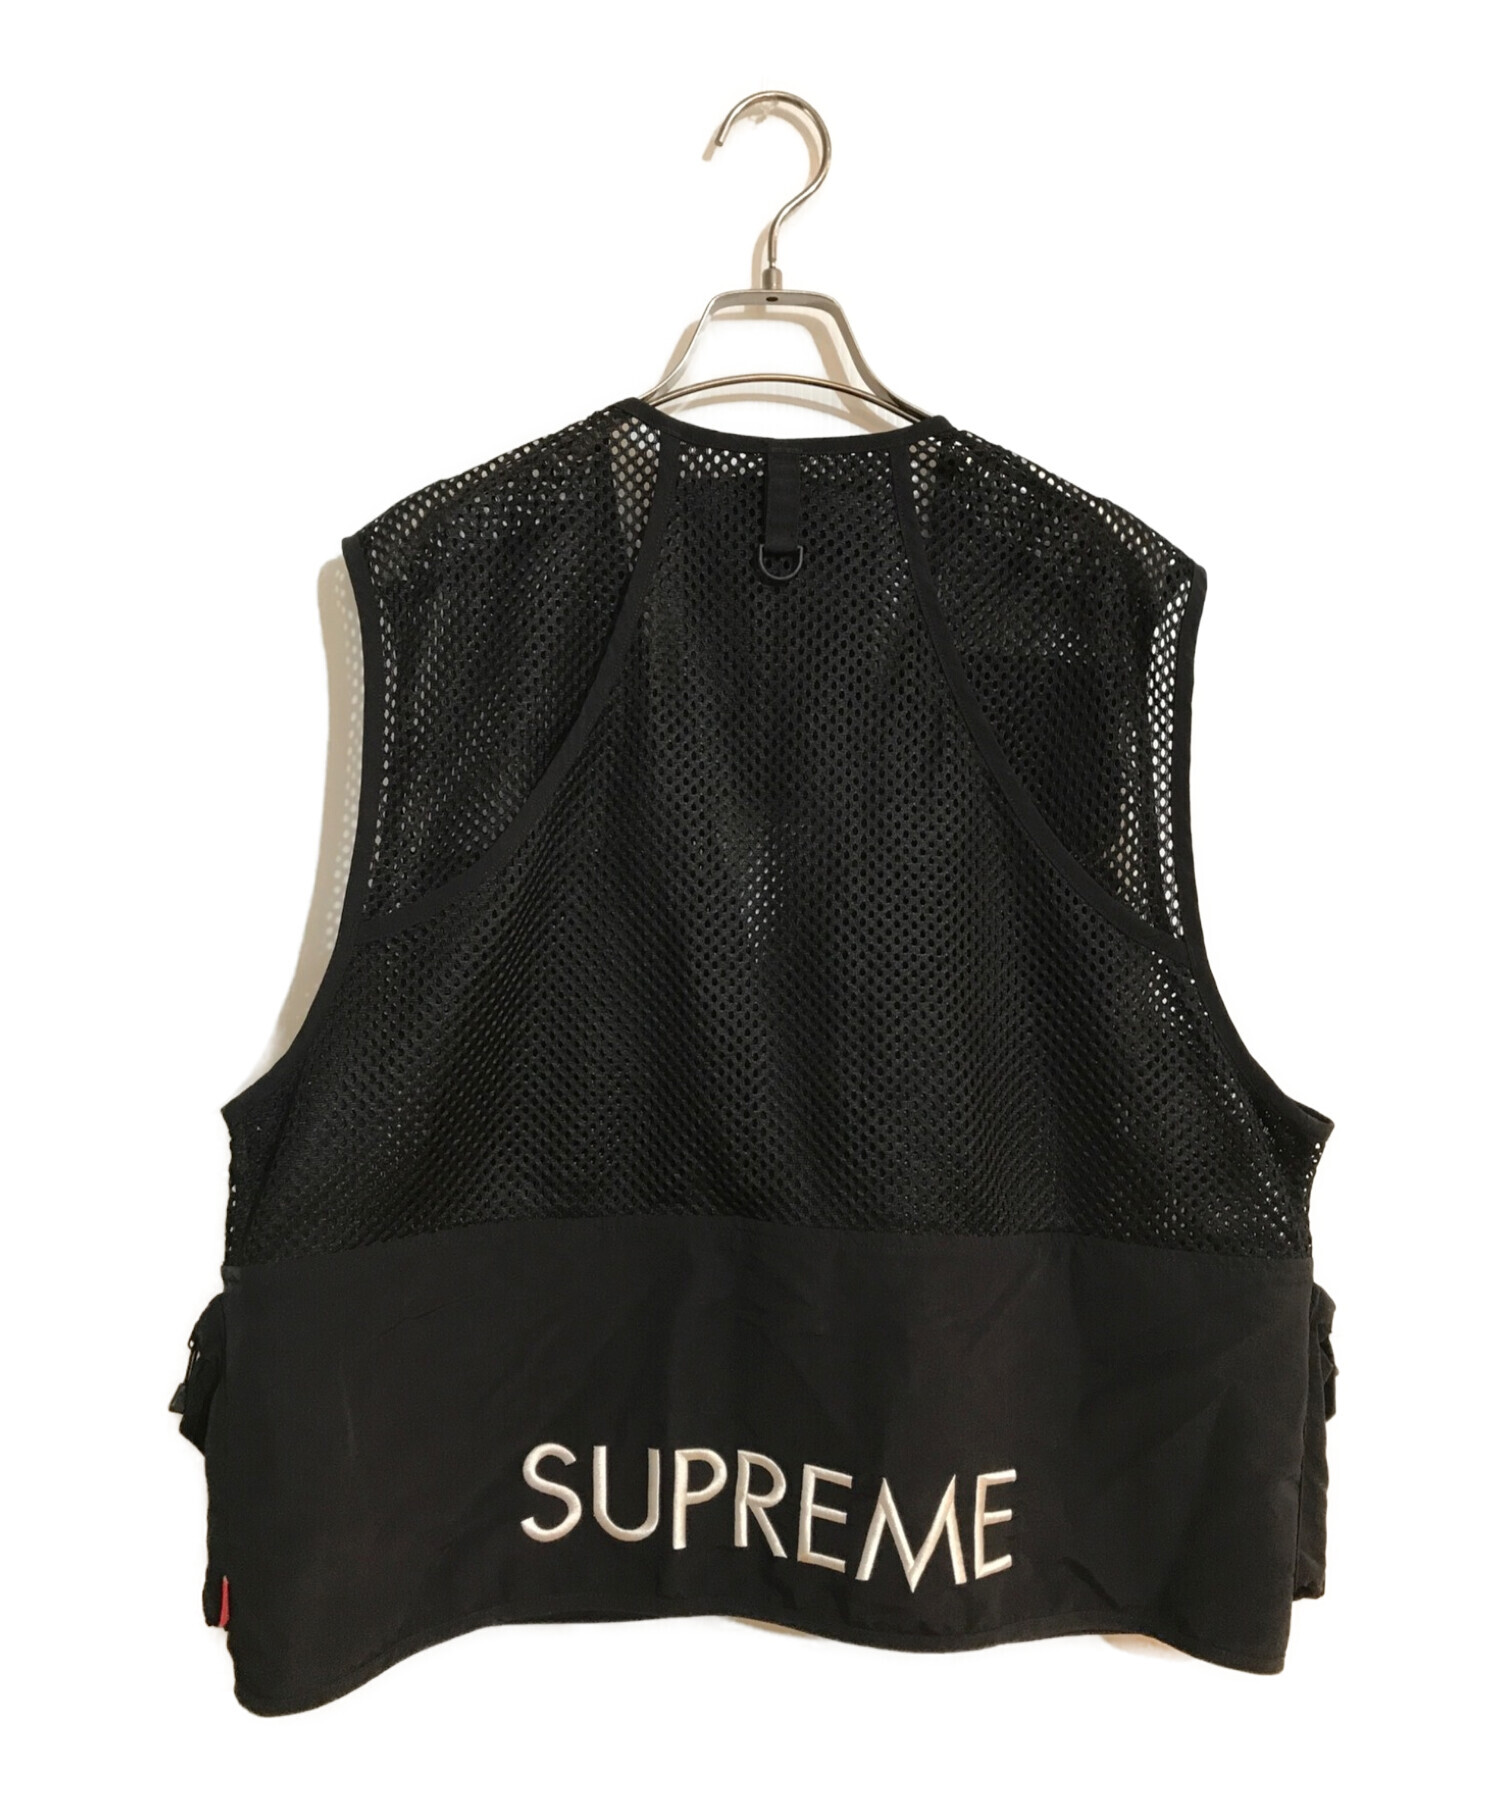 Supreme The North Face Cargo Vest Mサイズ